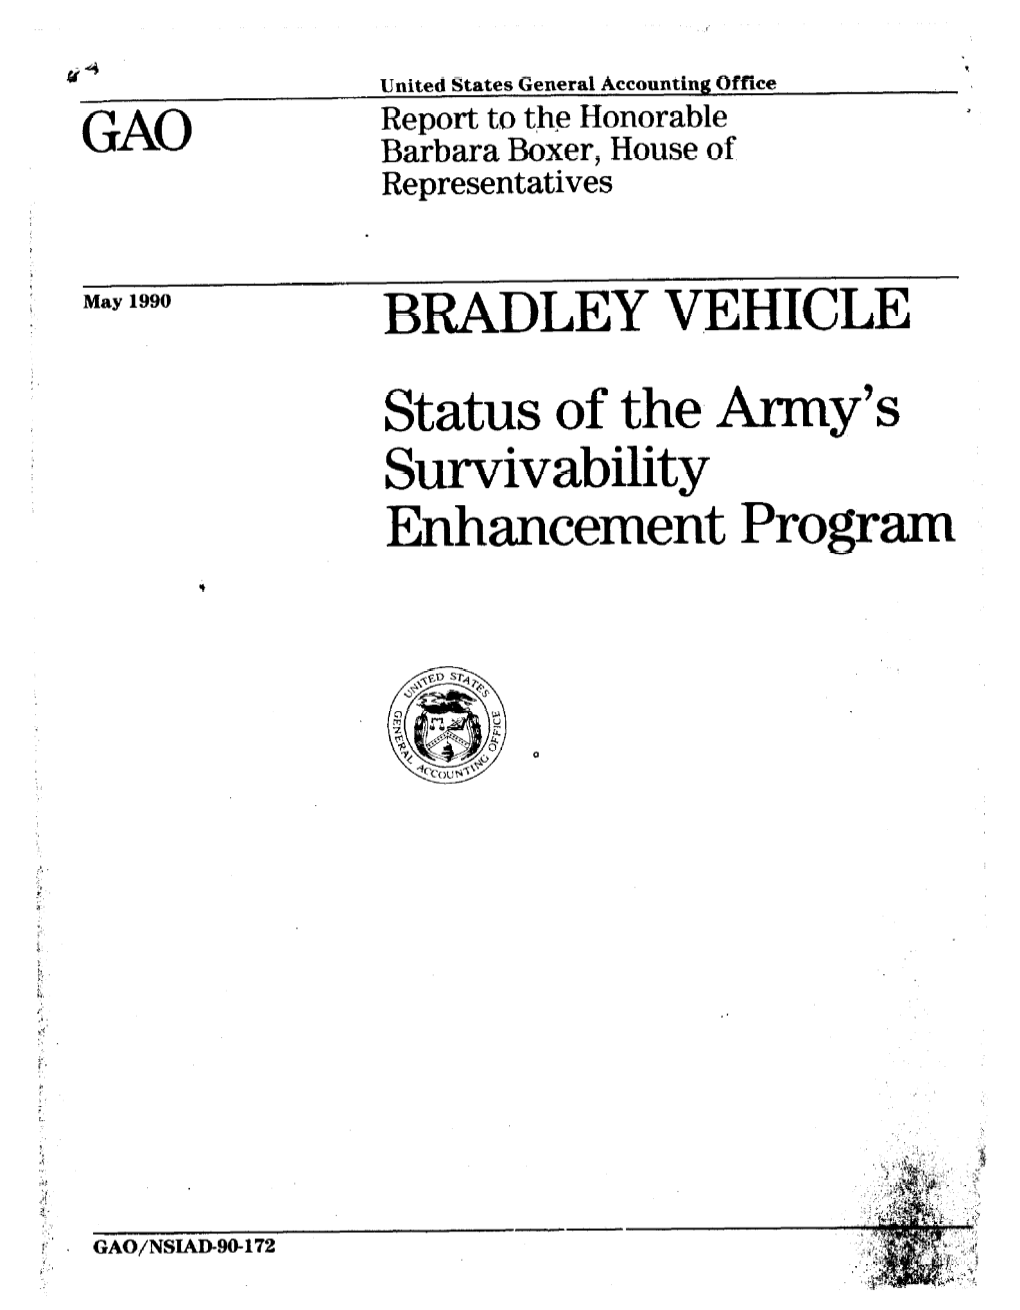 NSIAD-90-172 Bradley Vehicle: Status of the Army's Survivability Enhancement Program